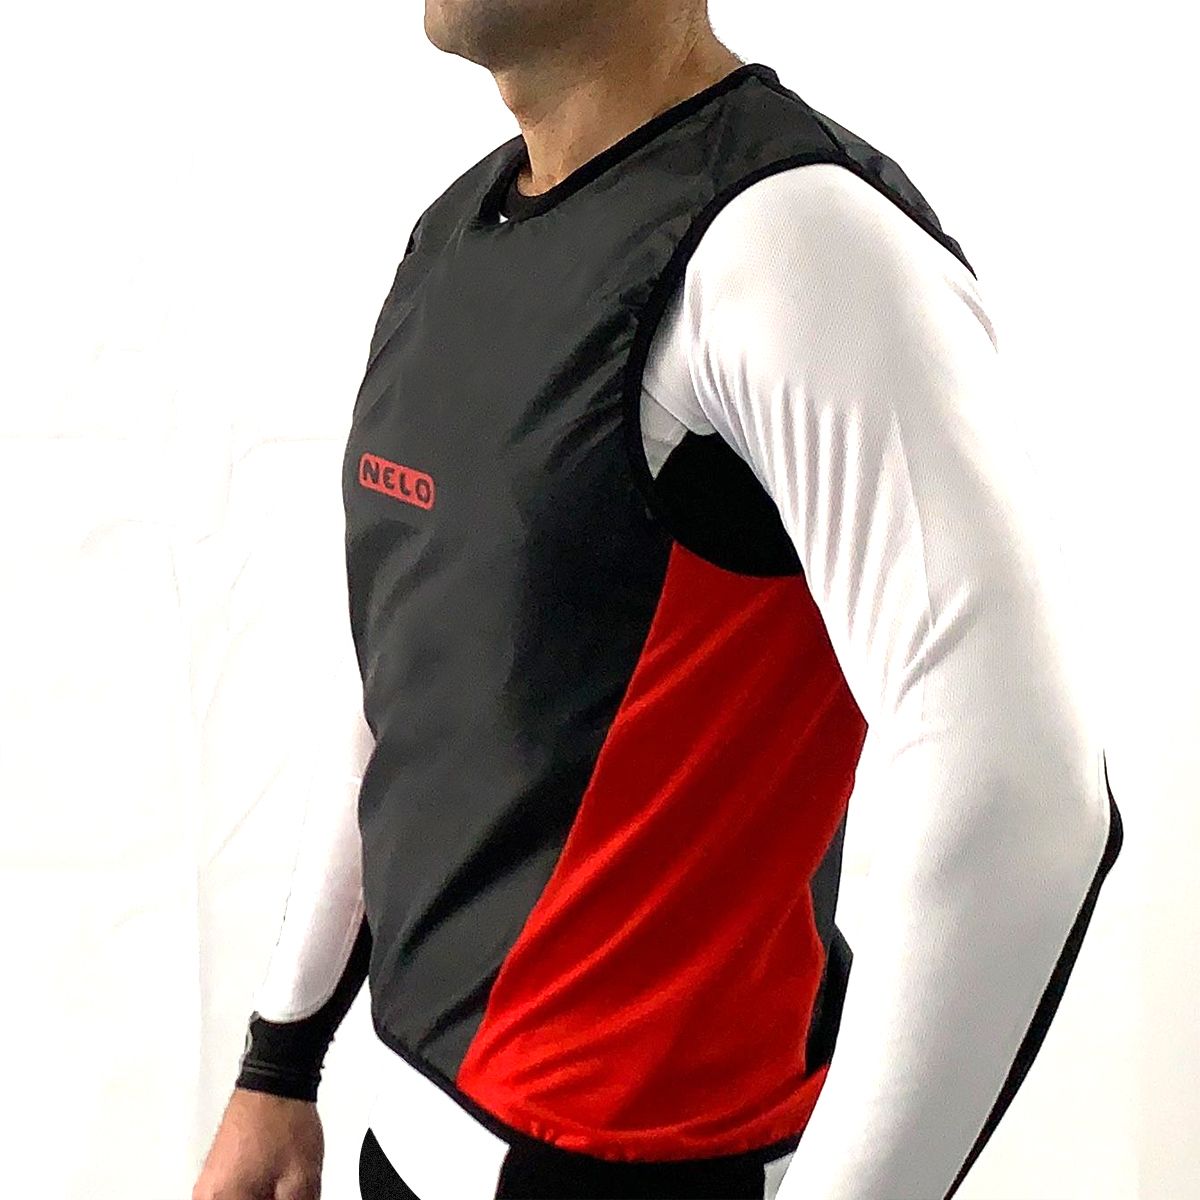 Nelo Wind vest for racing kayak - red, side